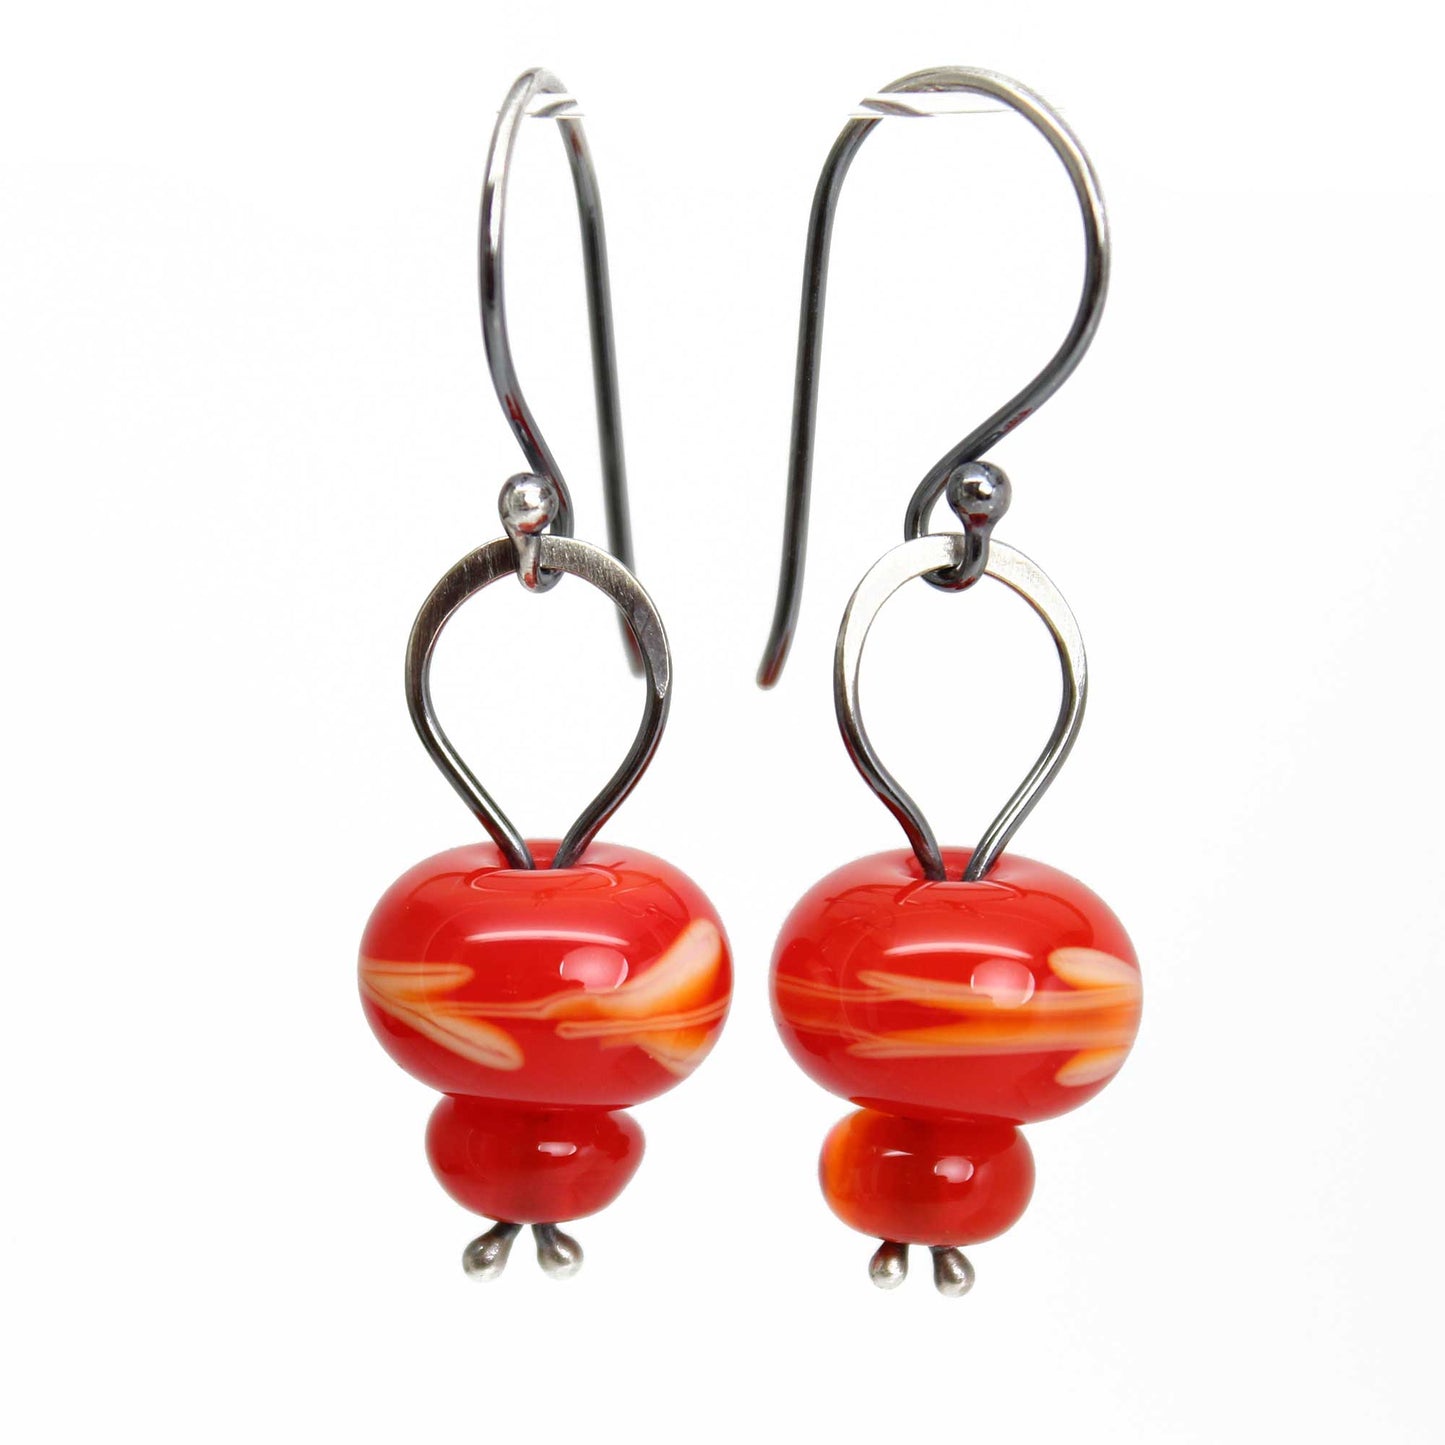 Load image into Gallery viewer, Red Lampwork Bead Earrings in Sterling Silver
